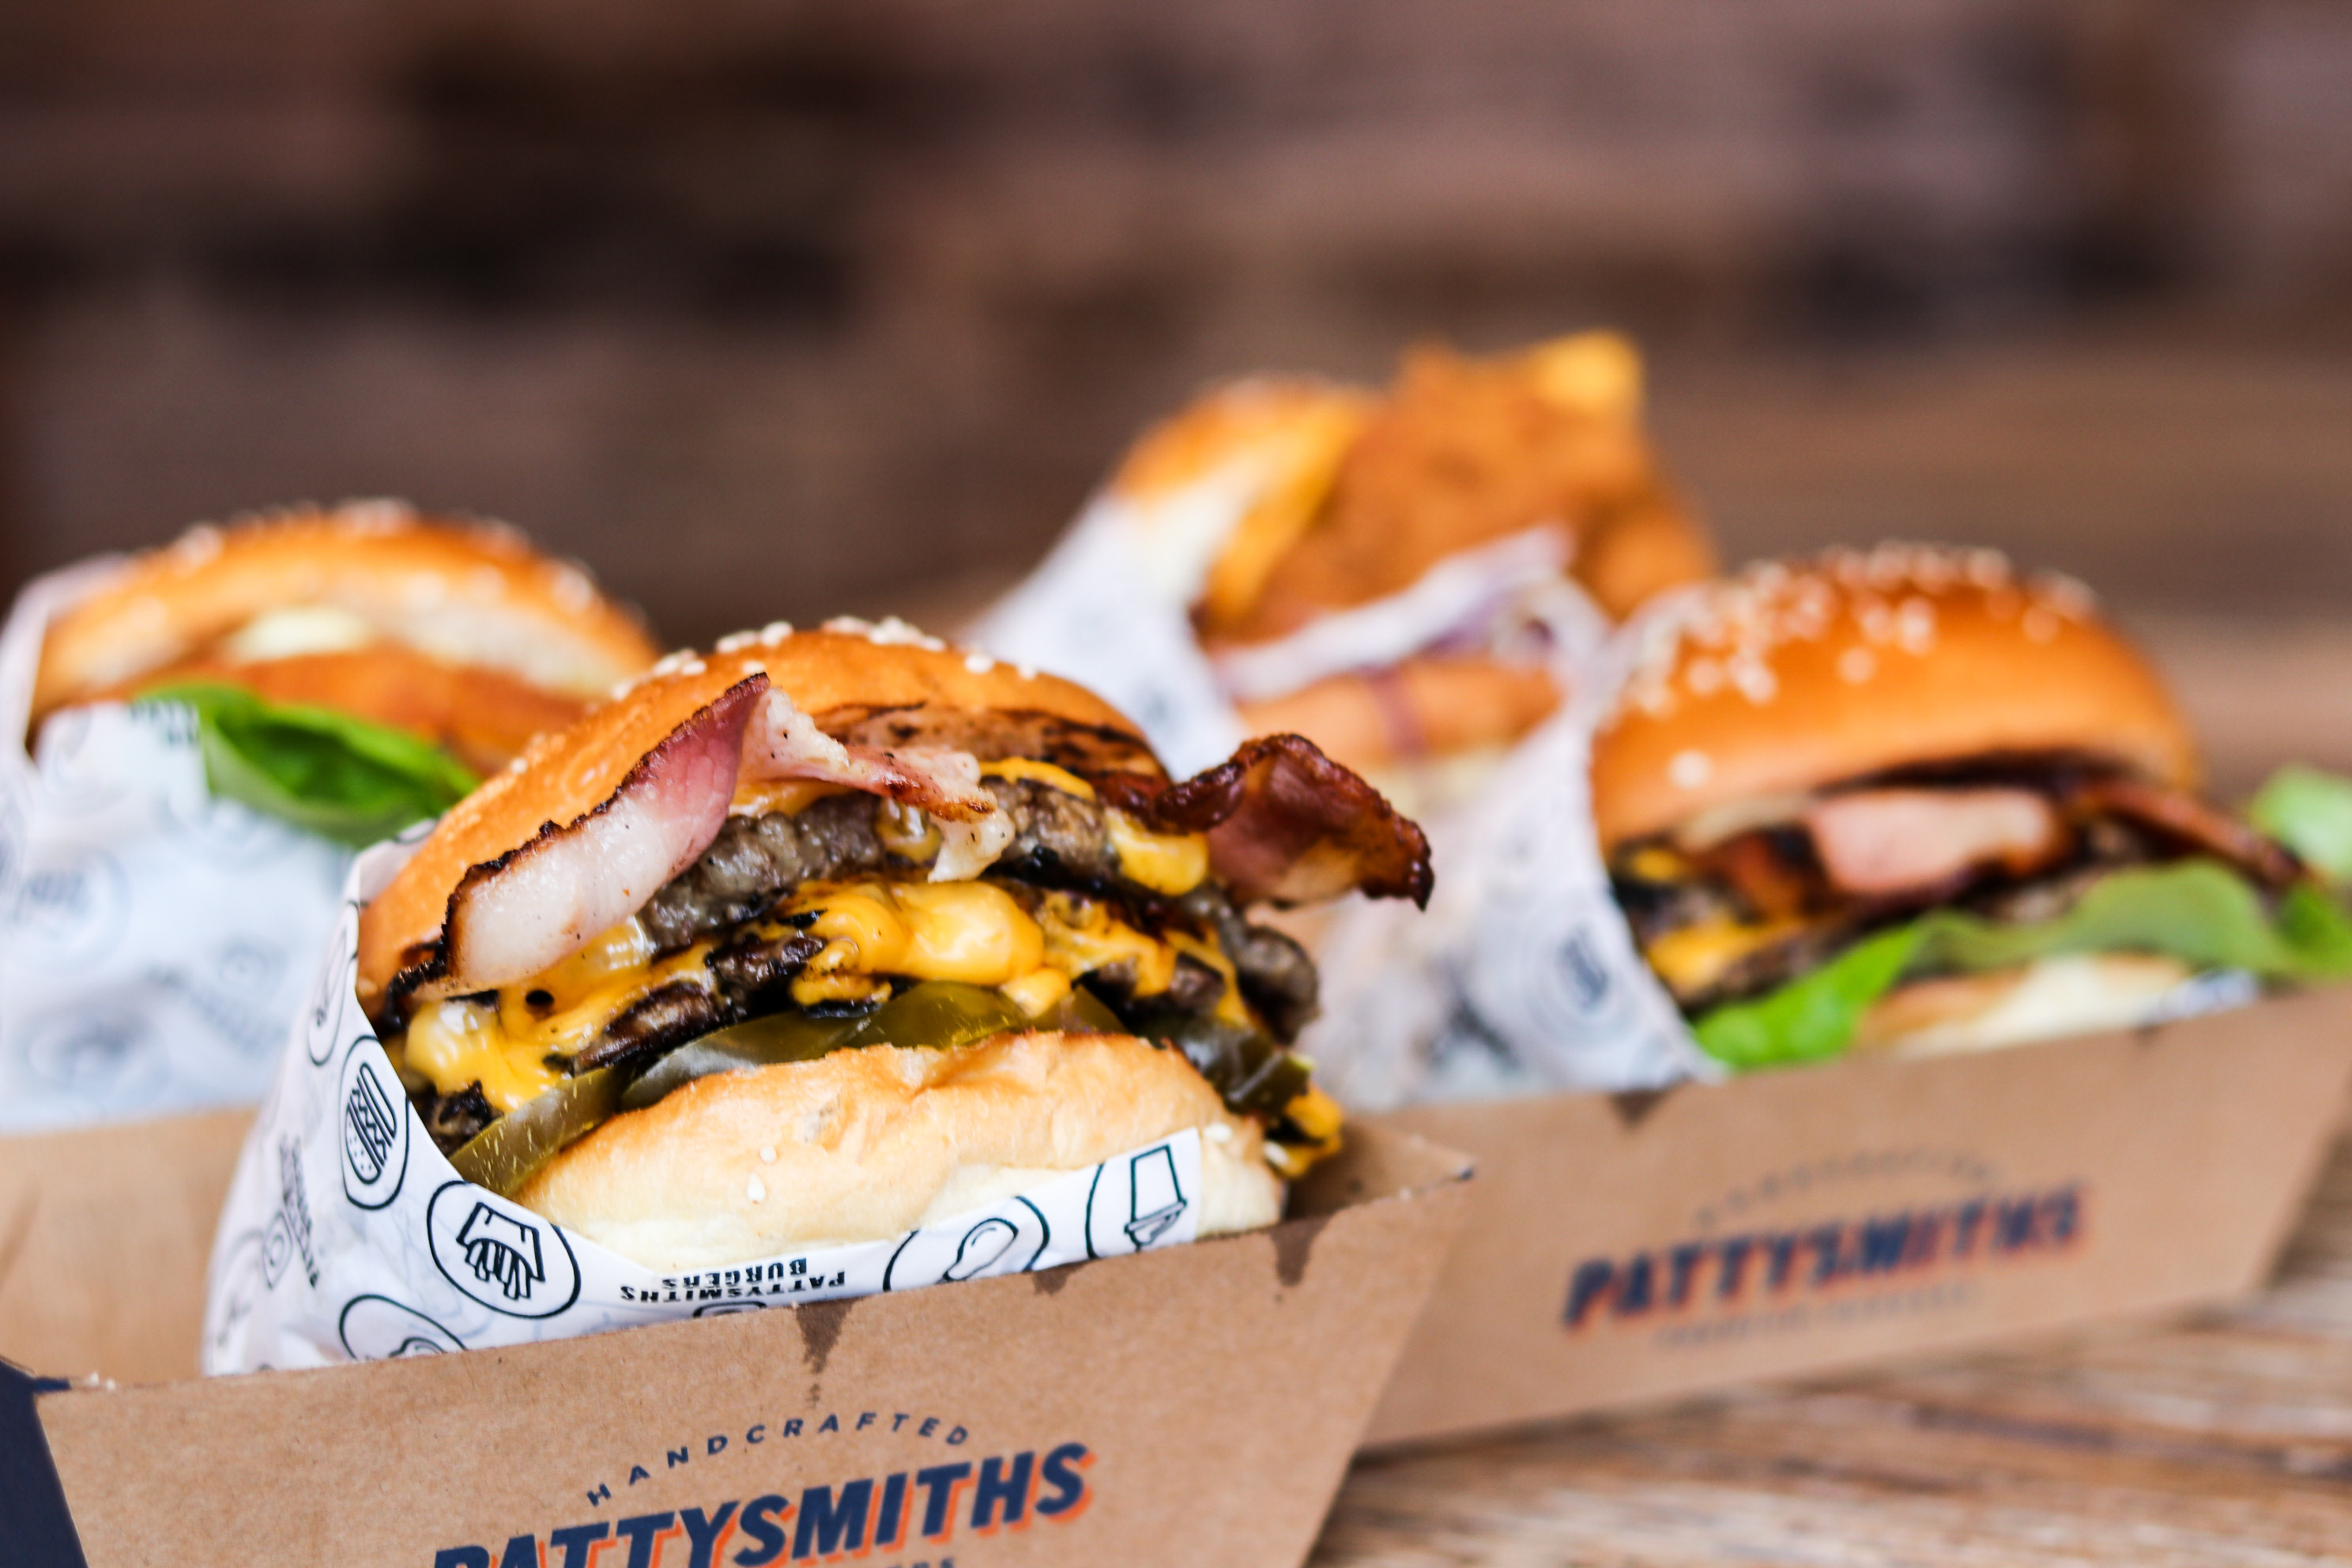 Pattysmiths - Handcrafted premium burgers